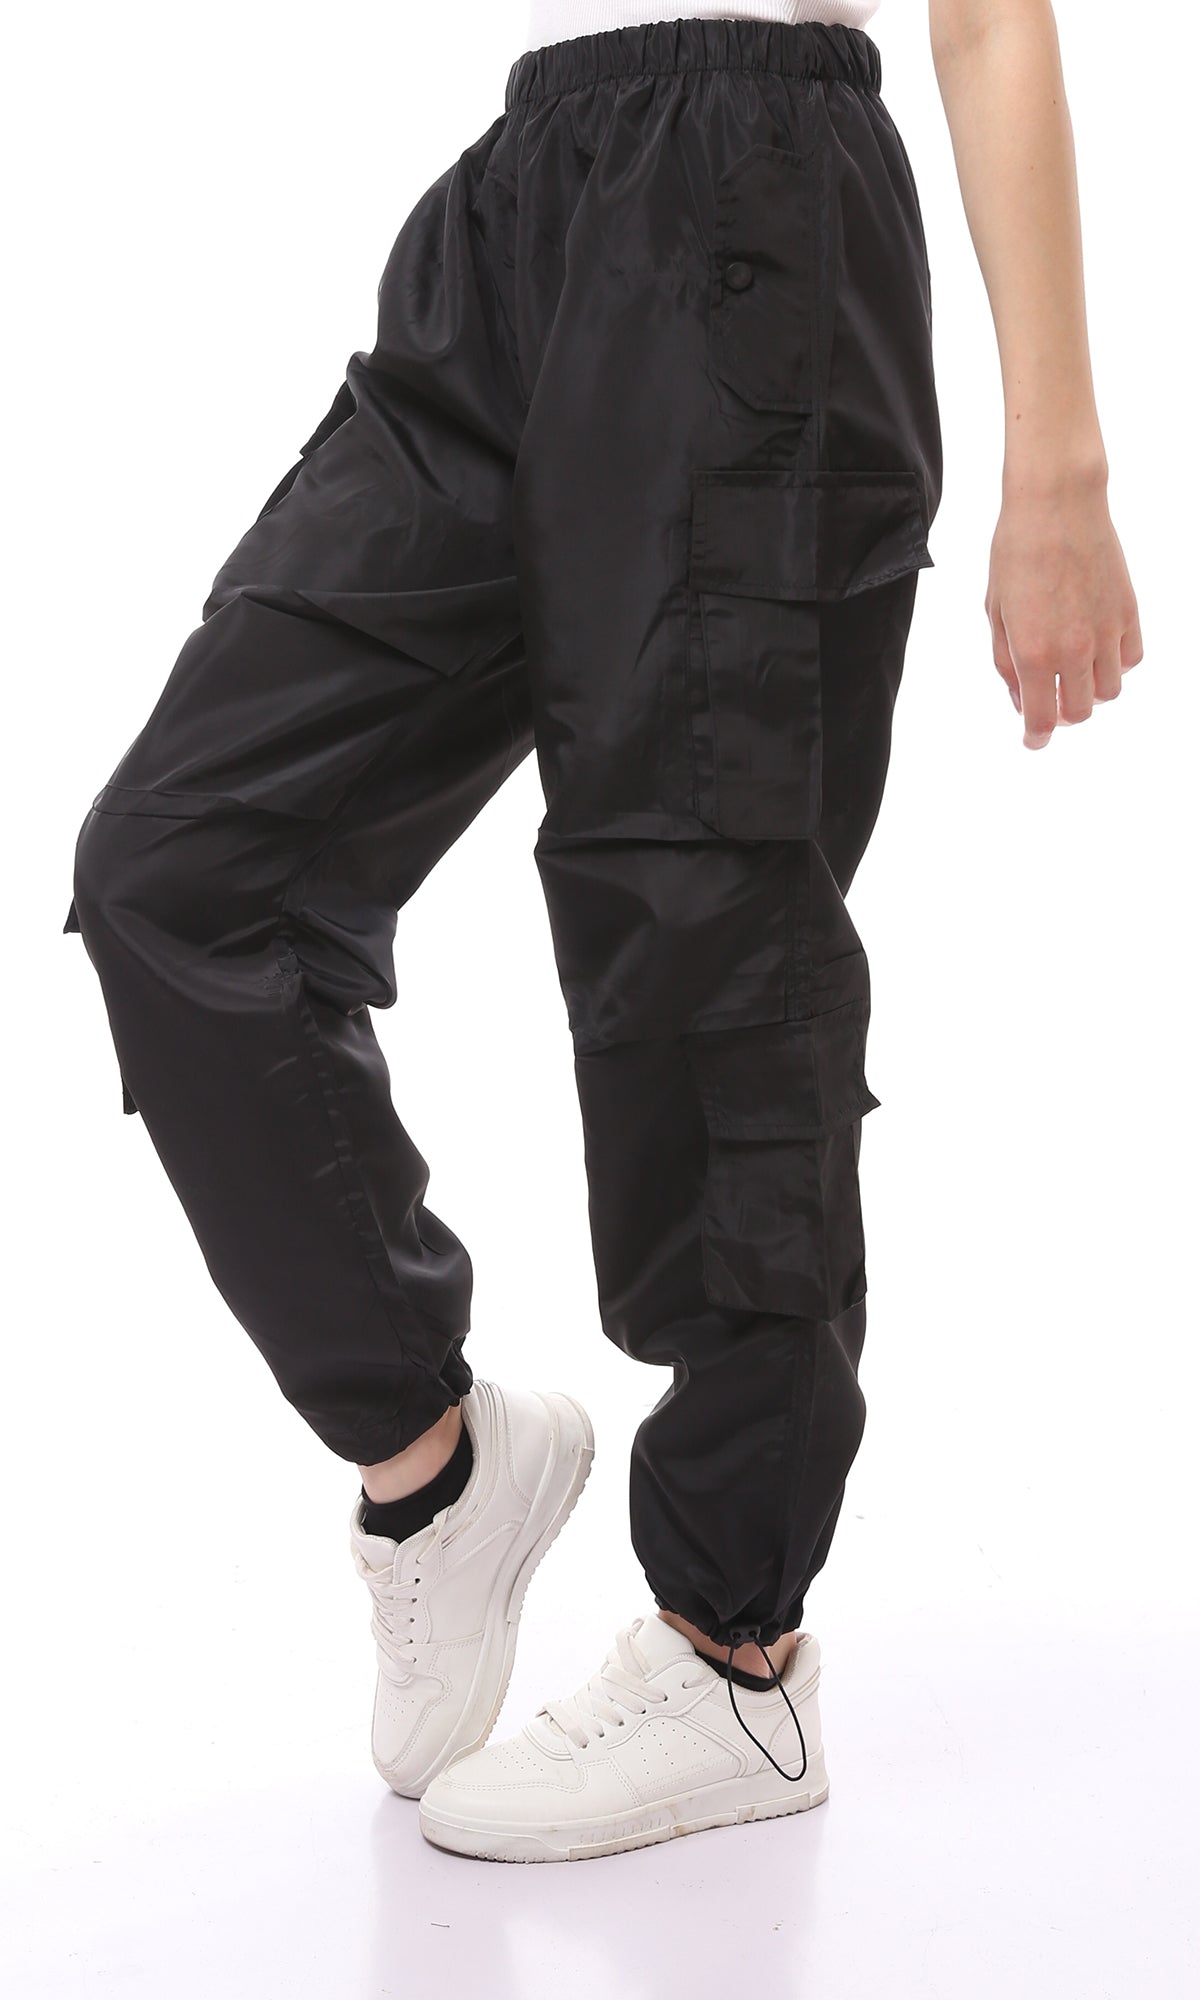 O170600 Adjustable Elastic Waist Black Waterproof Pants